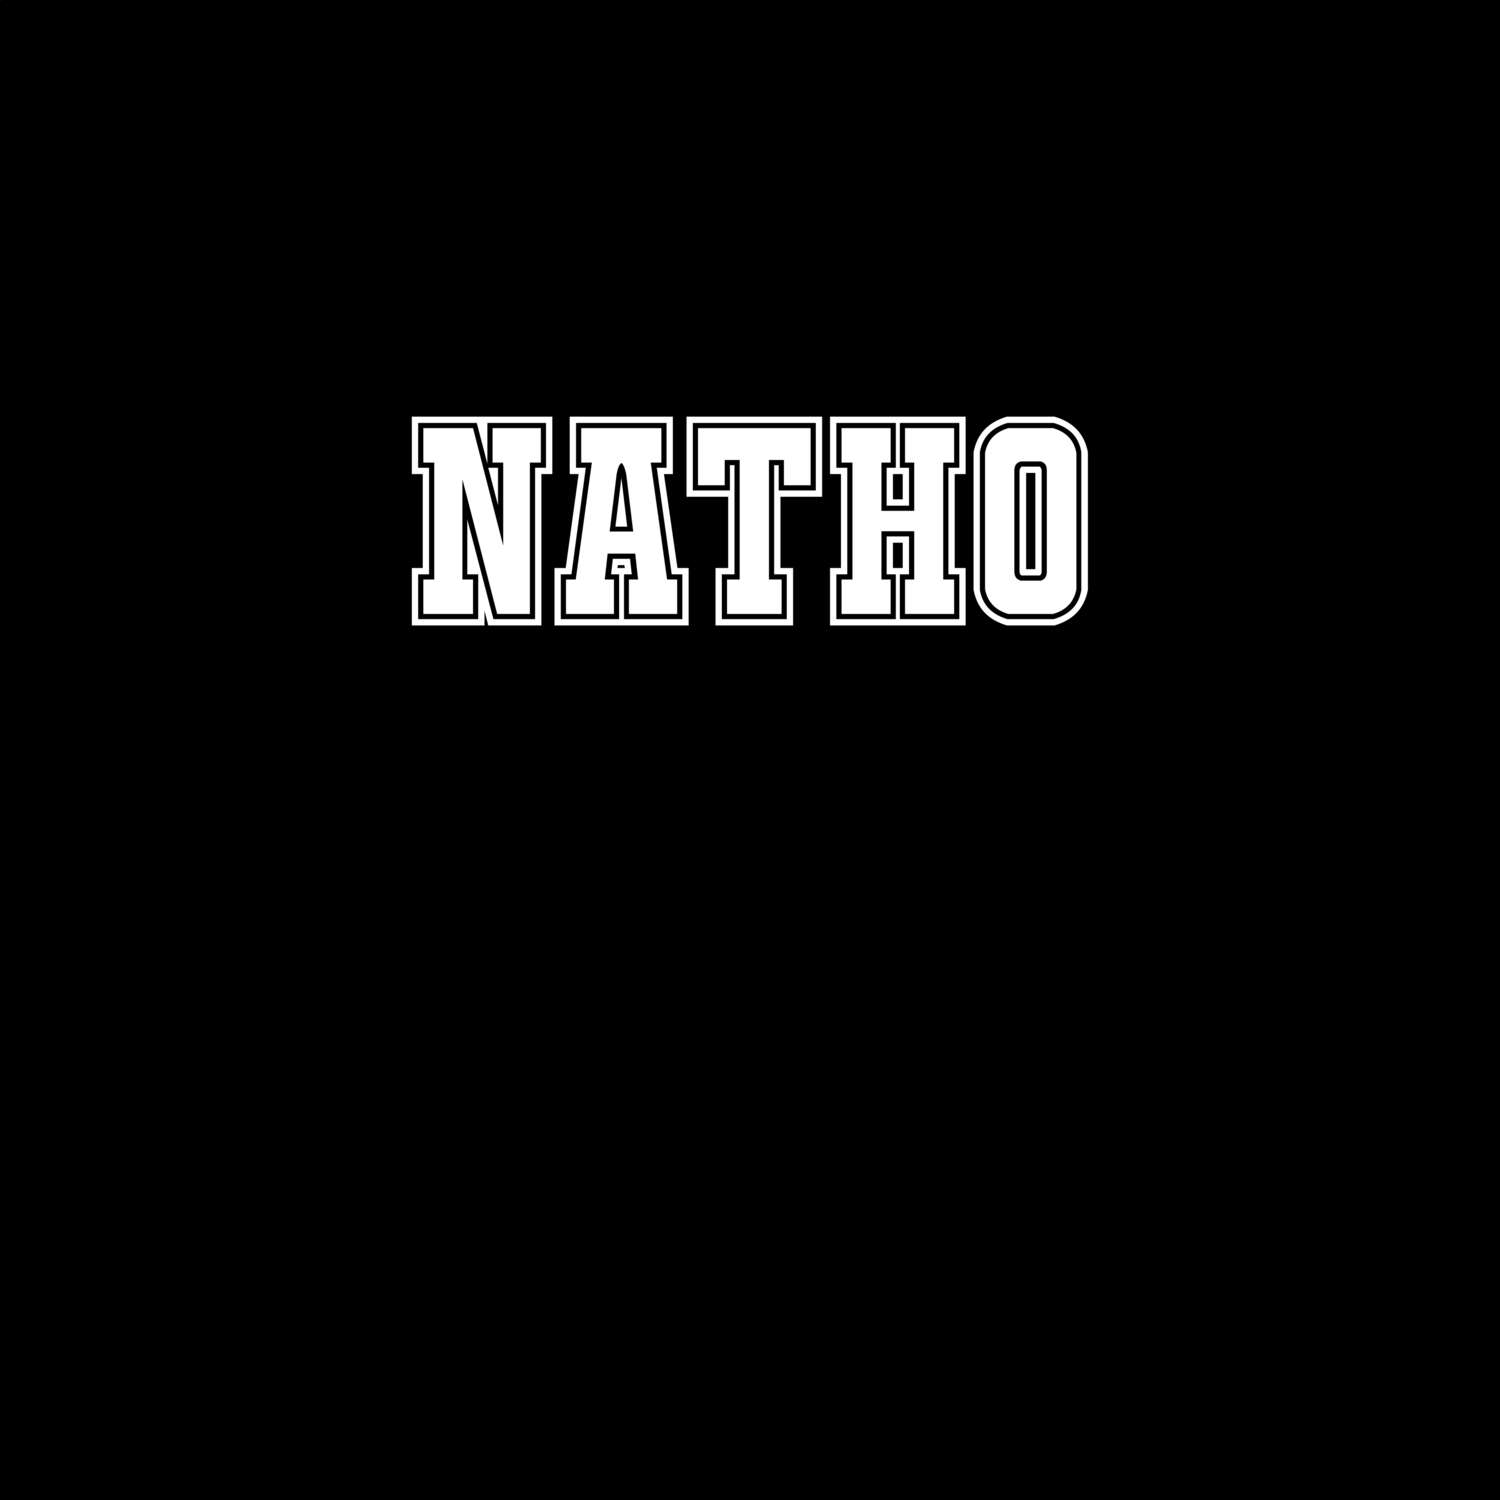 Natho T-Shirt »Classic«